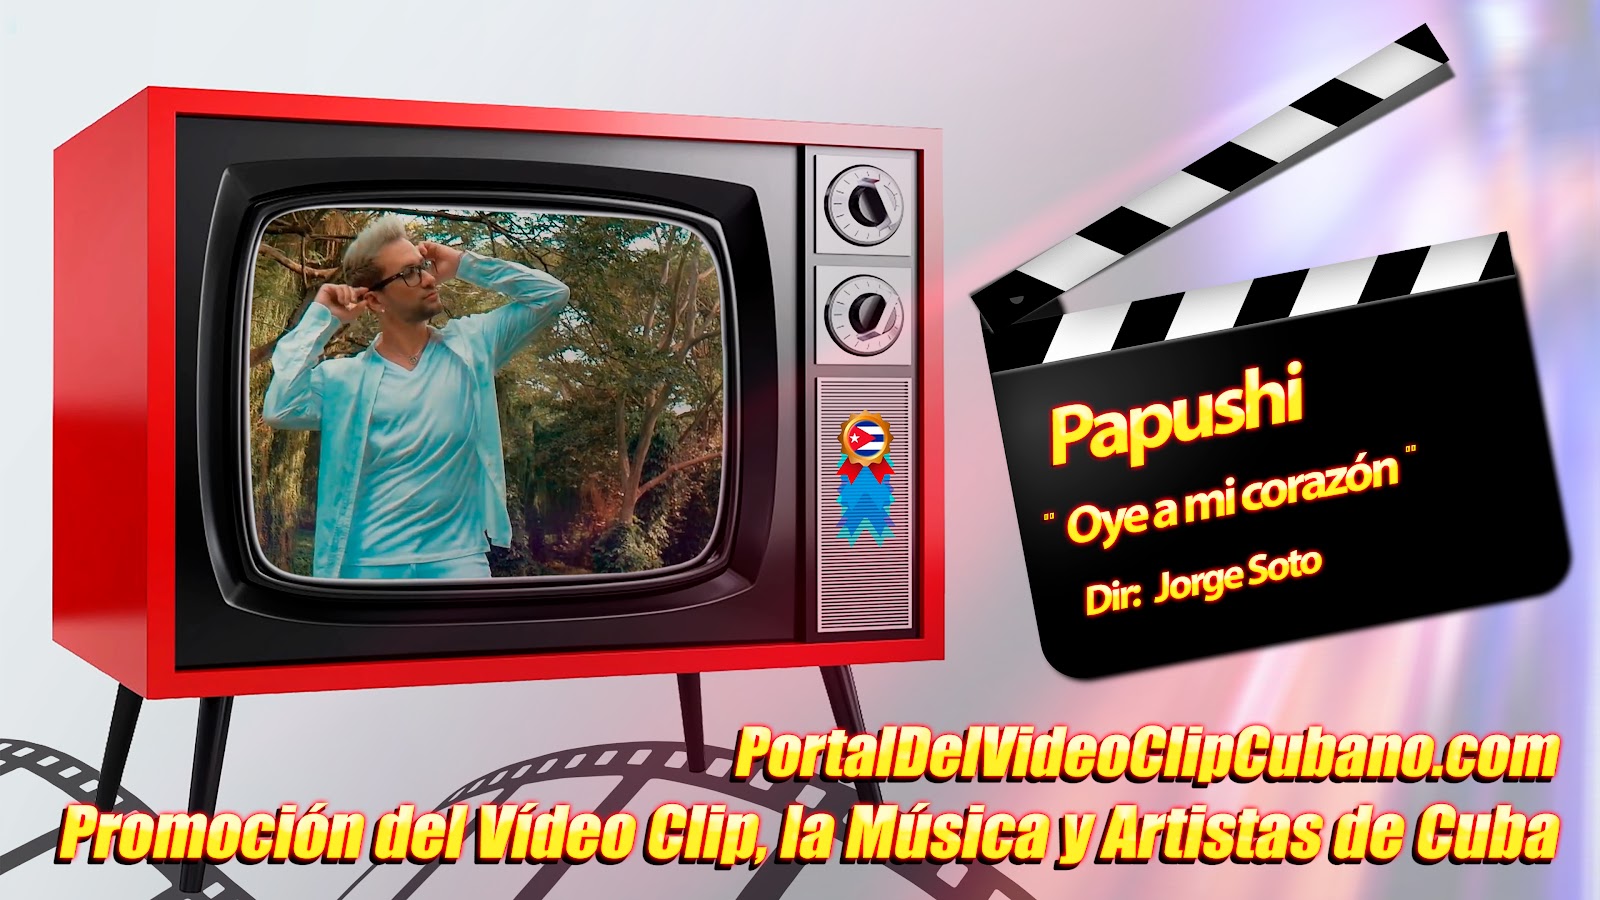 Papushi - ¨Oye a mi corazón¨ - Director: Jorge Soto. Portal Del Vídeo Clip Cubano. Música Cubana. Canción. CUBA